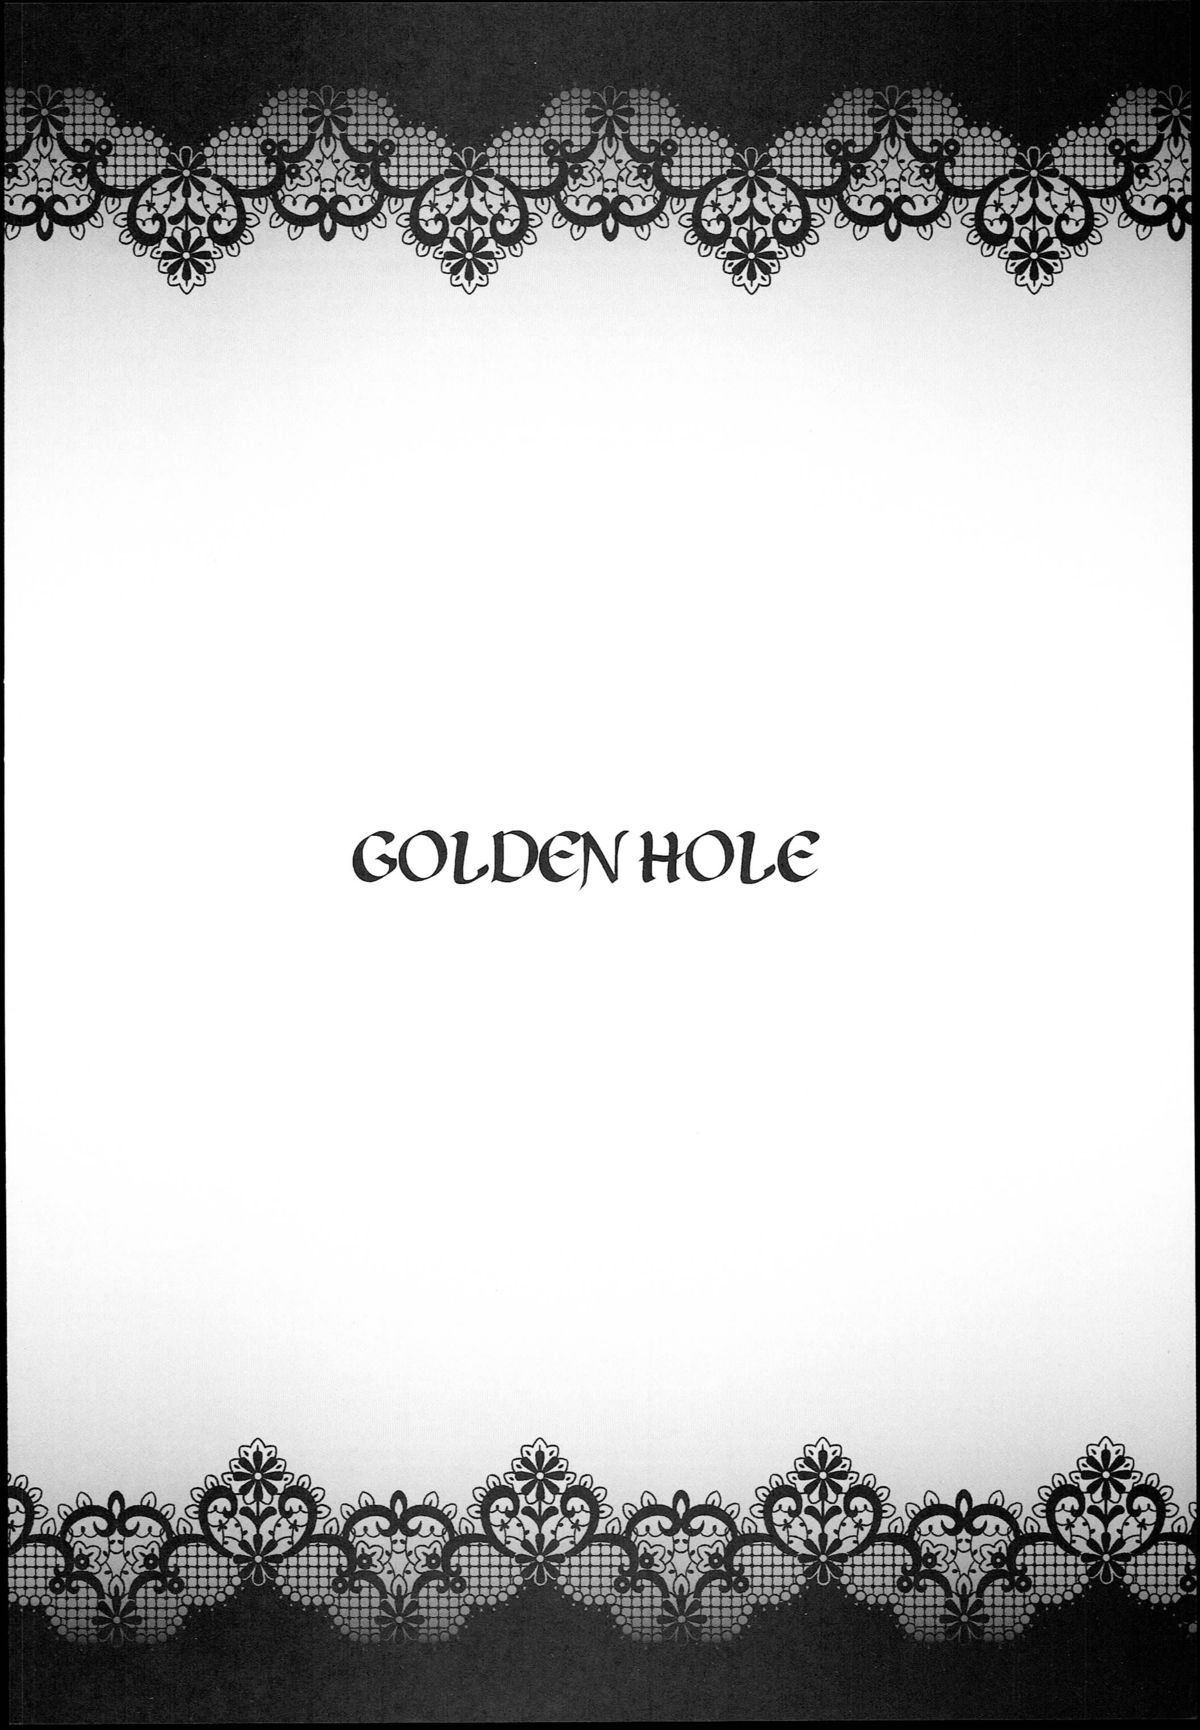 (C85) [sin-maniax (轟真)] GOLDEN HOLE (ToLOVEる)